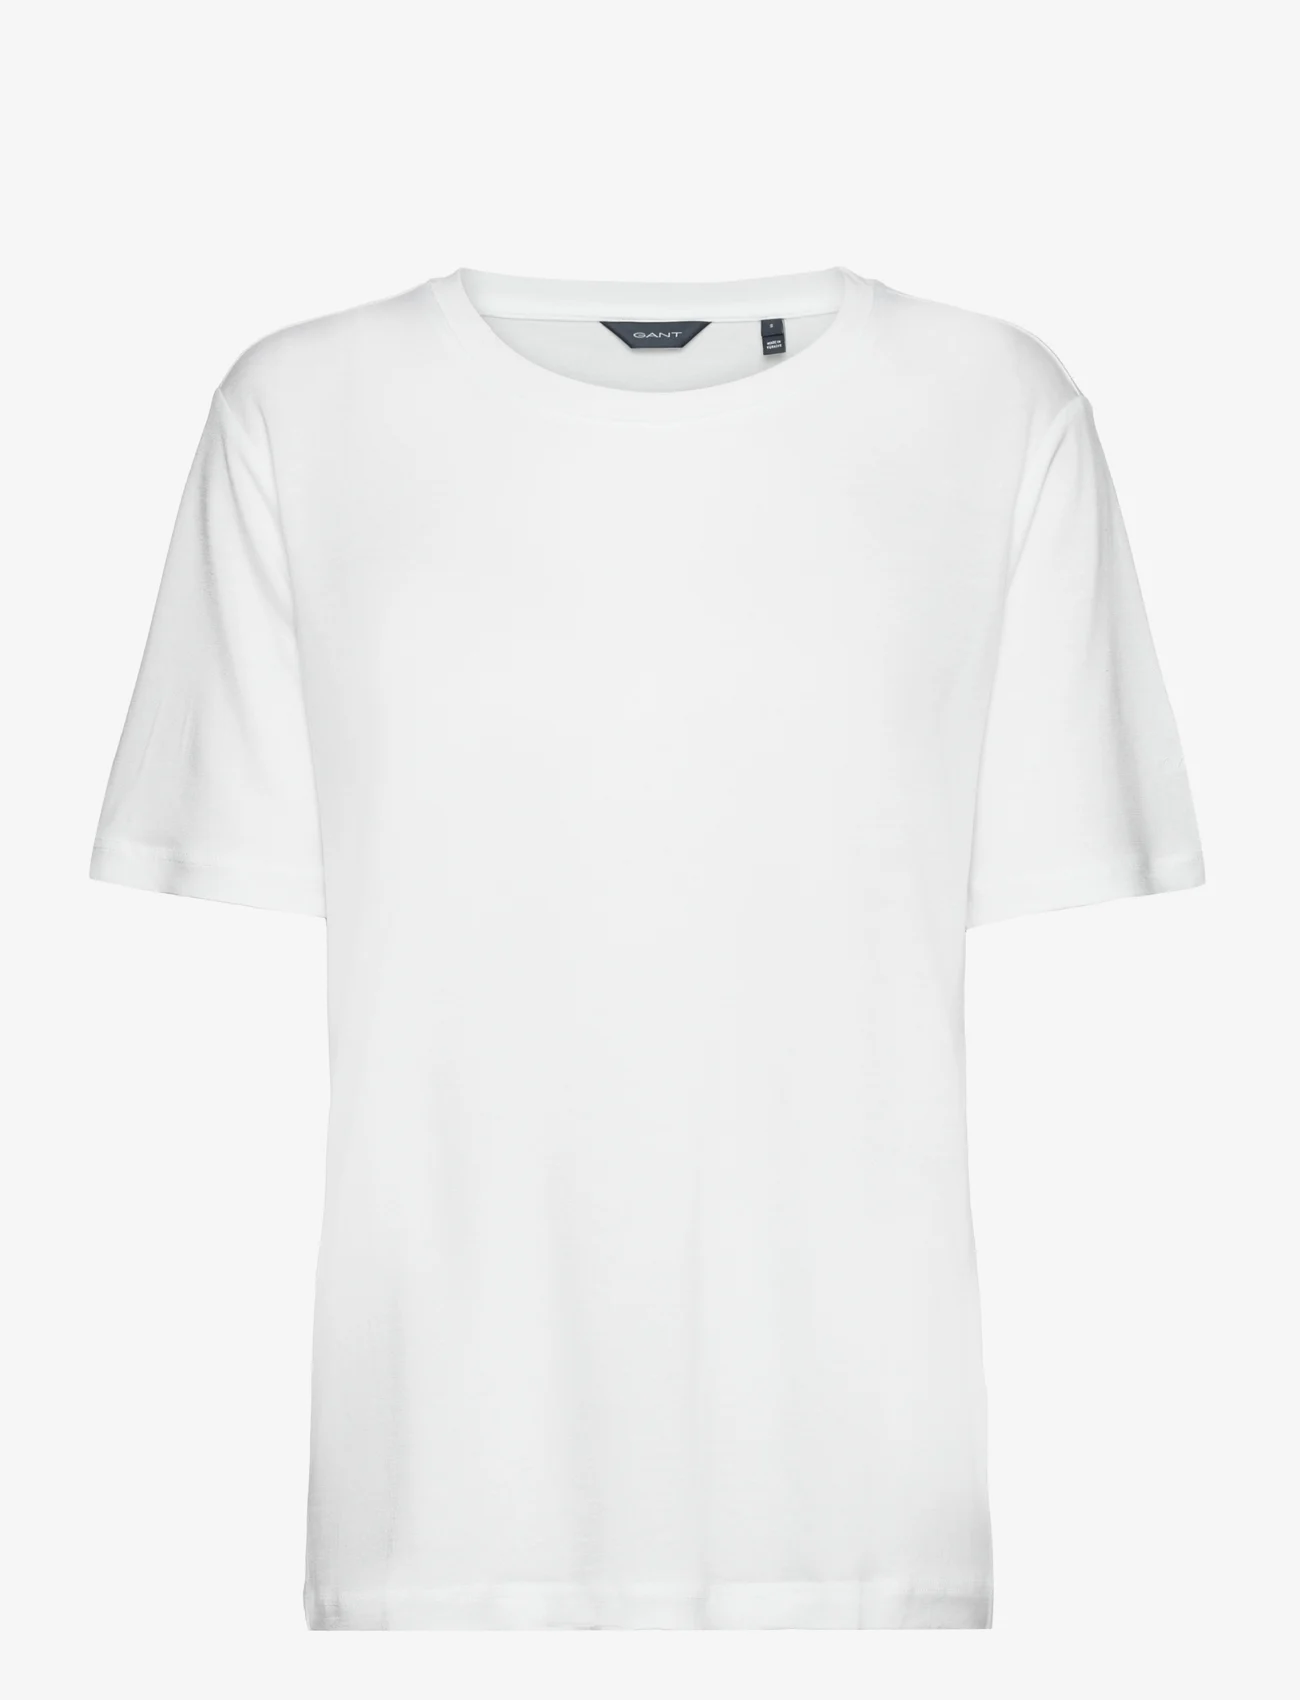 GANT - REL DRAPED SS T-SHIRT - t-shirt & tops - white - 0